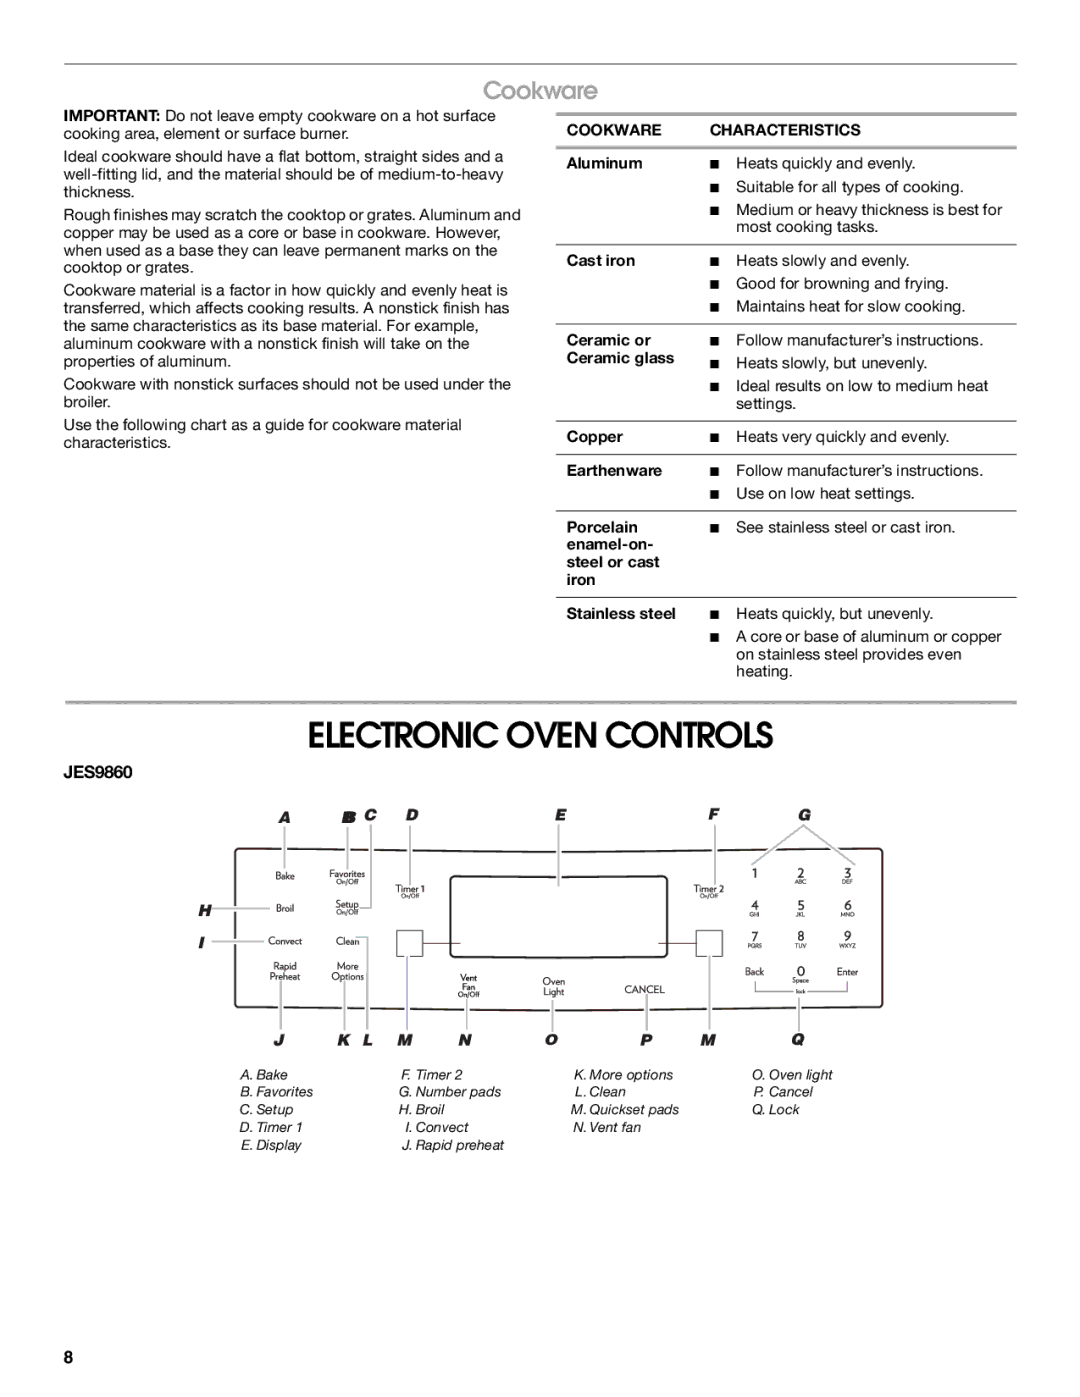 Jenn-Air JES9750 manual Electronic Oven Controls, JES9860, Cookware Characteristics 